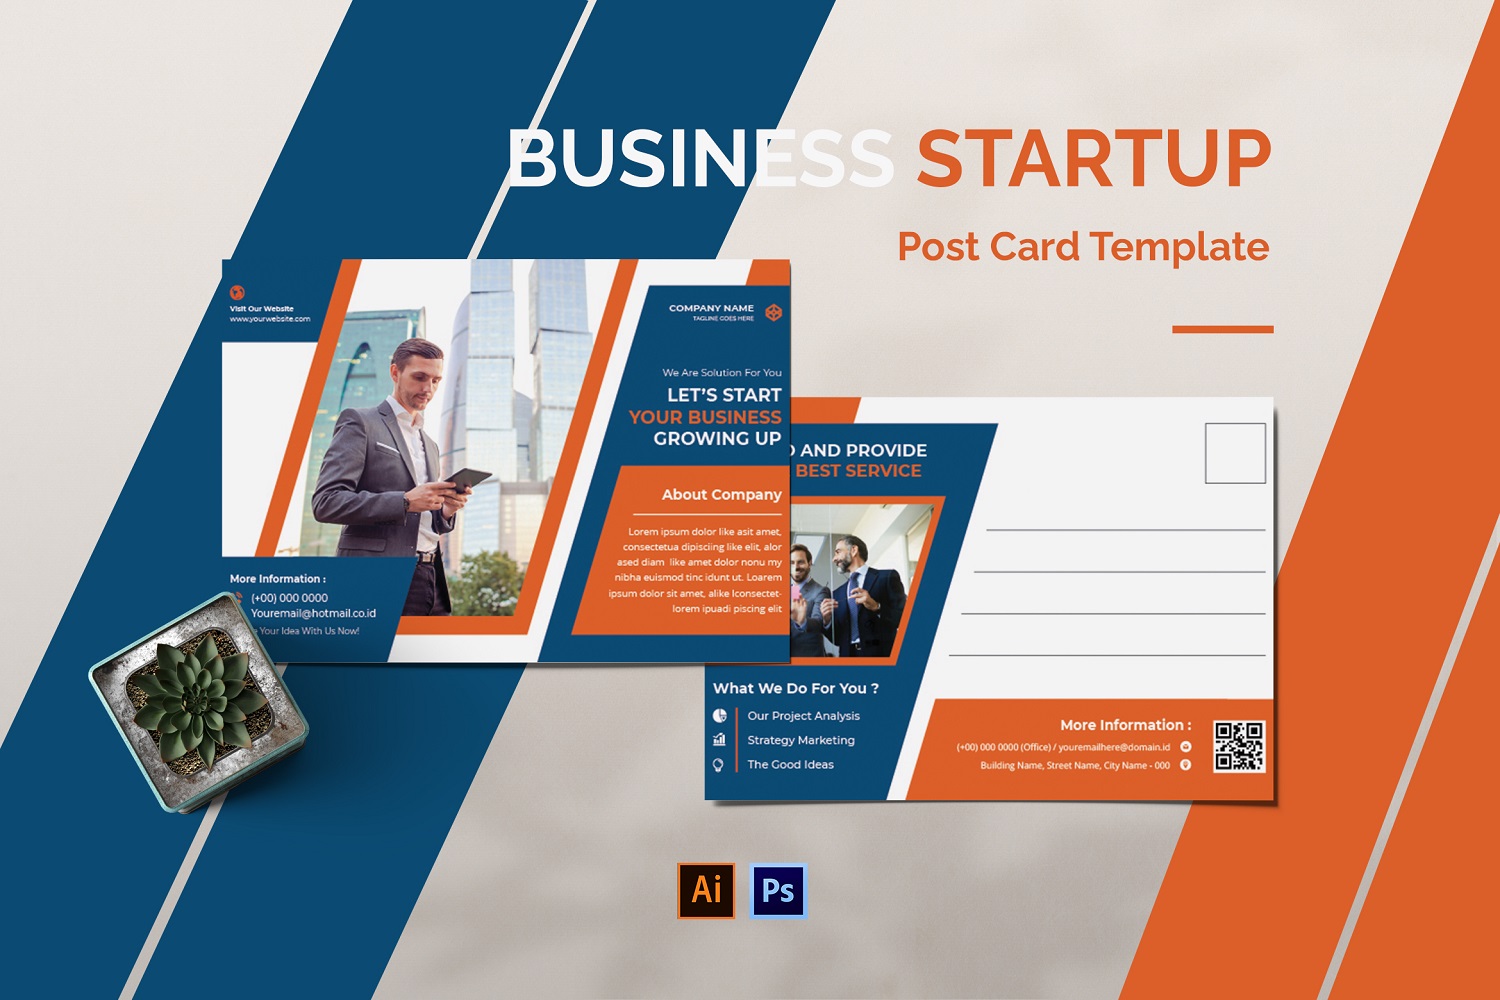 Business Start Up Post Card